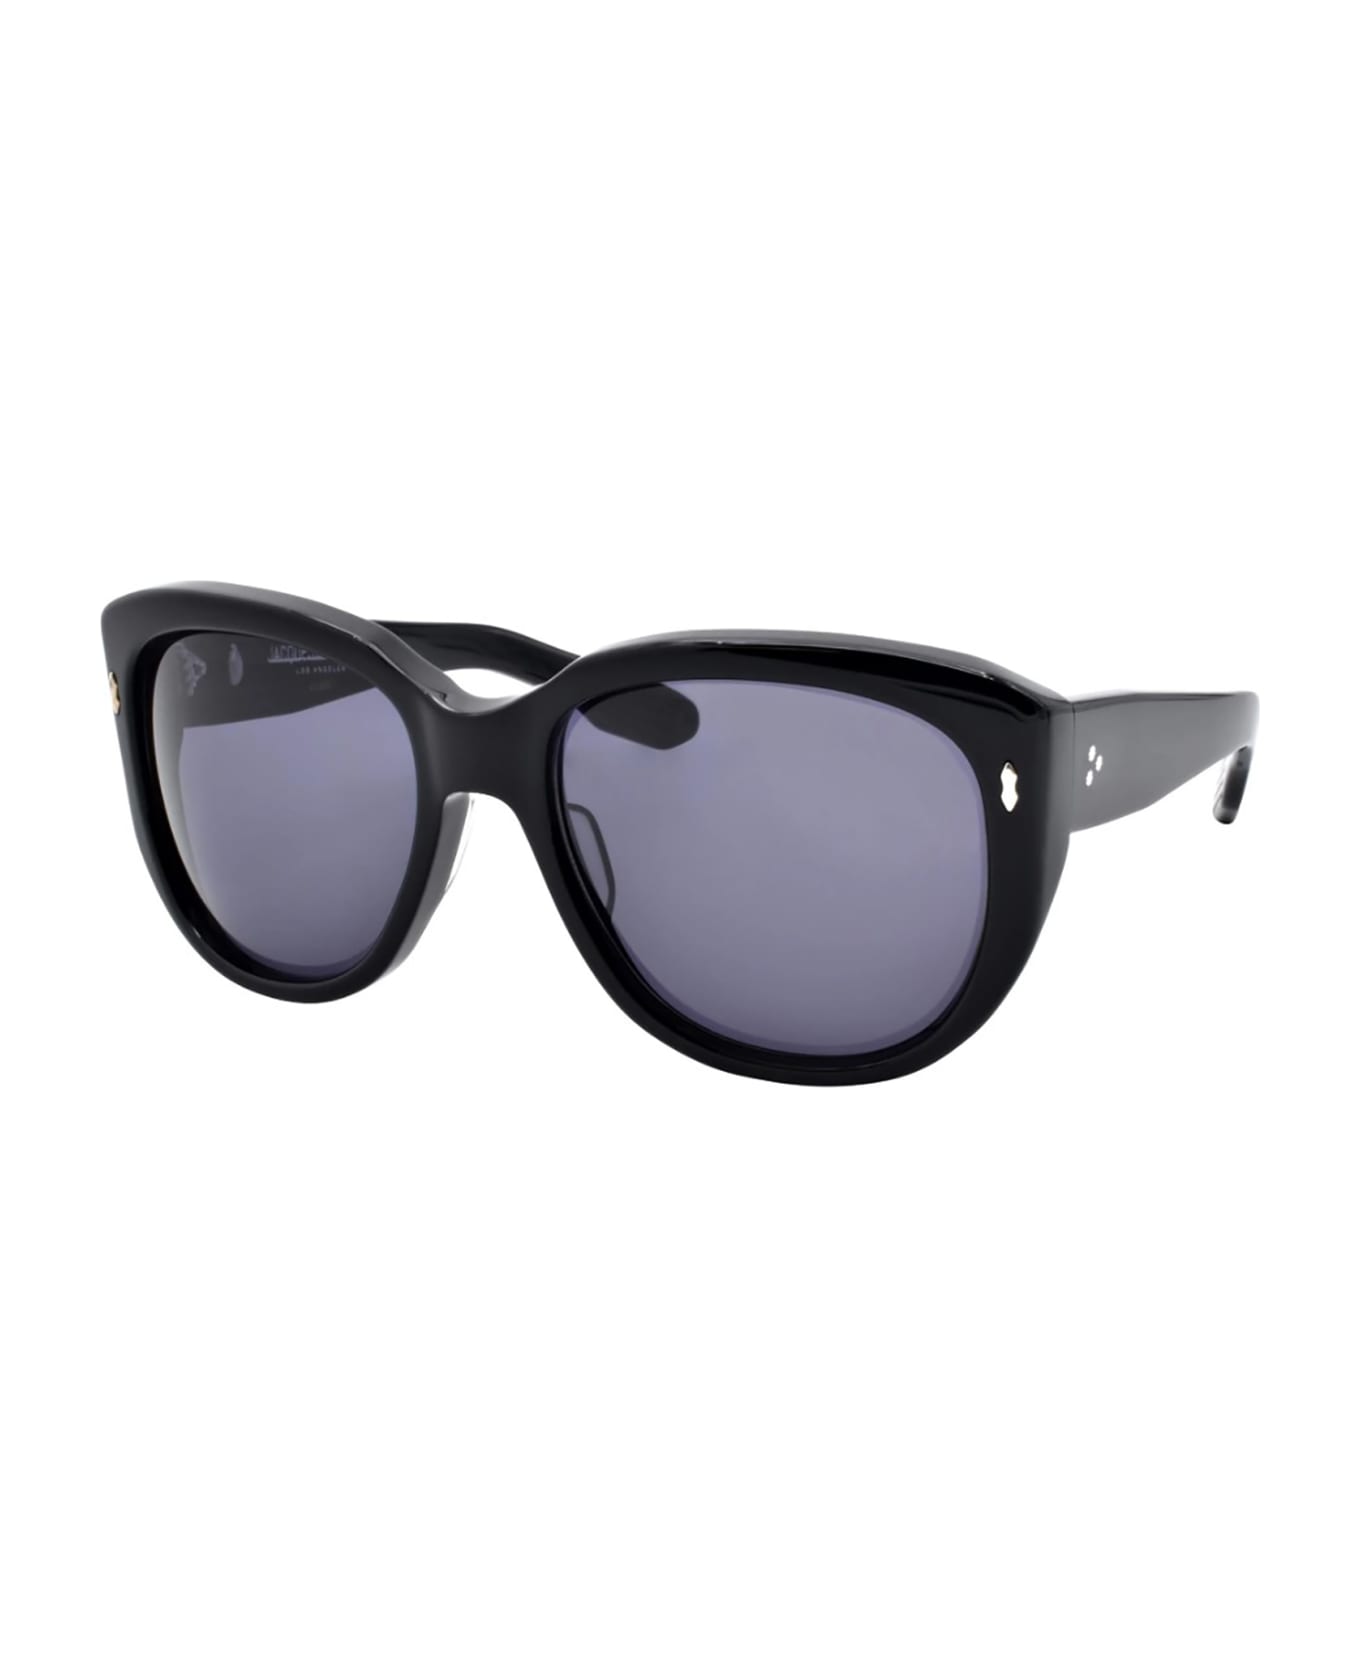 Jacques Marie Mage ROXY Sunglasses Bluetone - Black